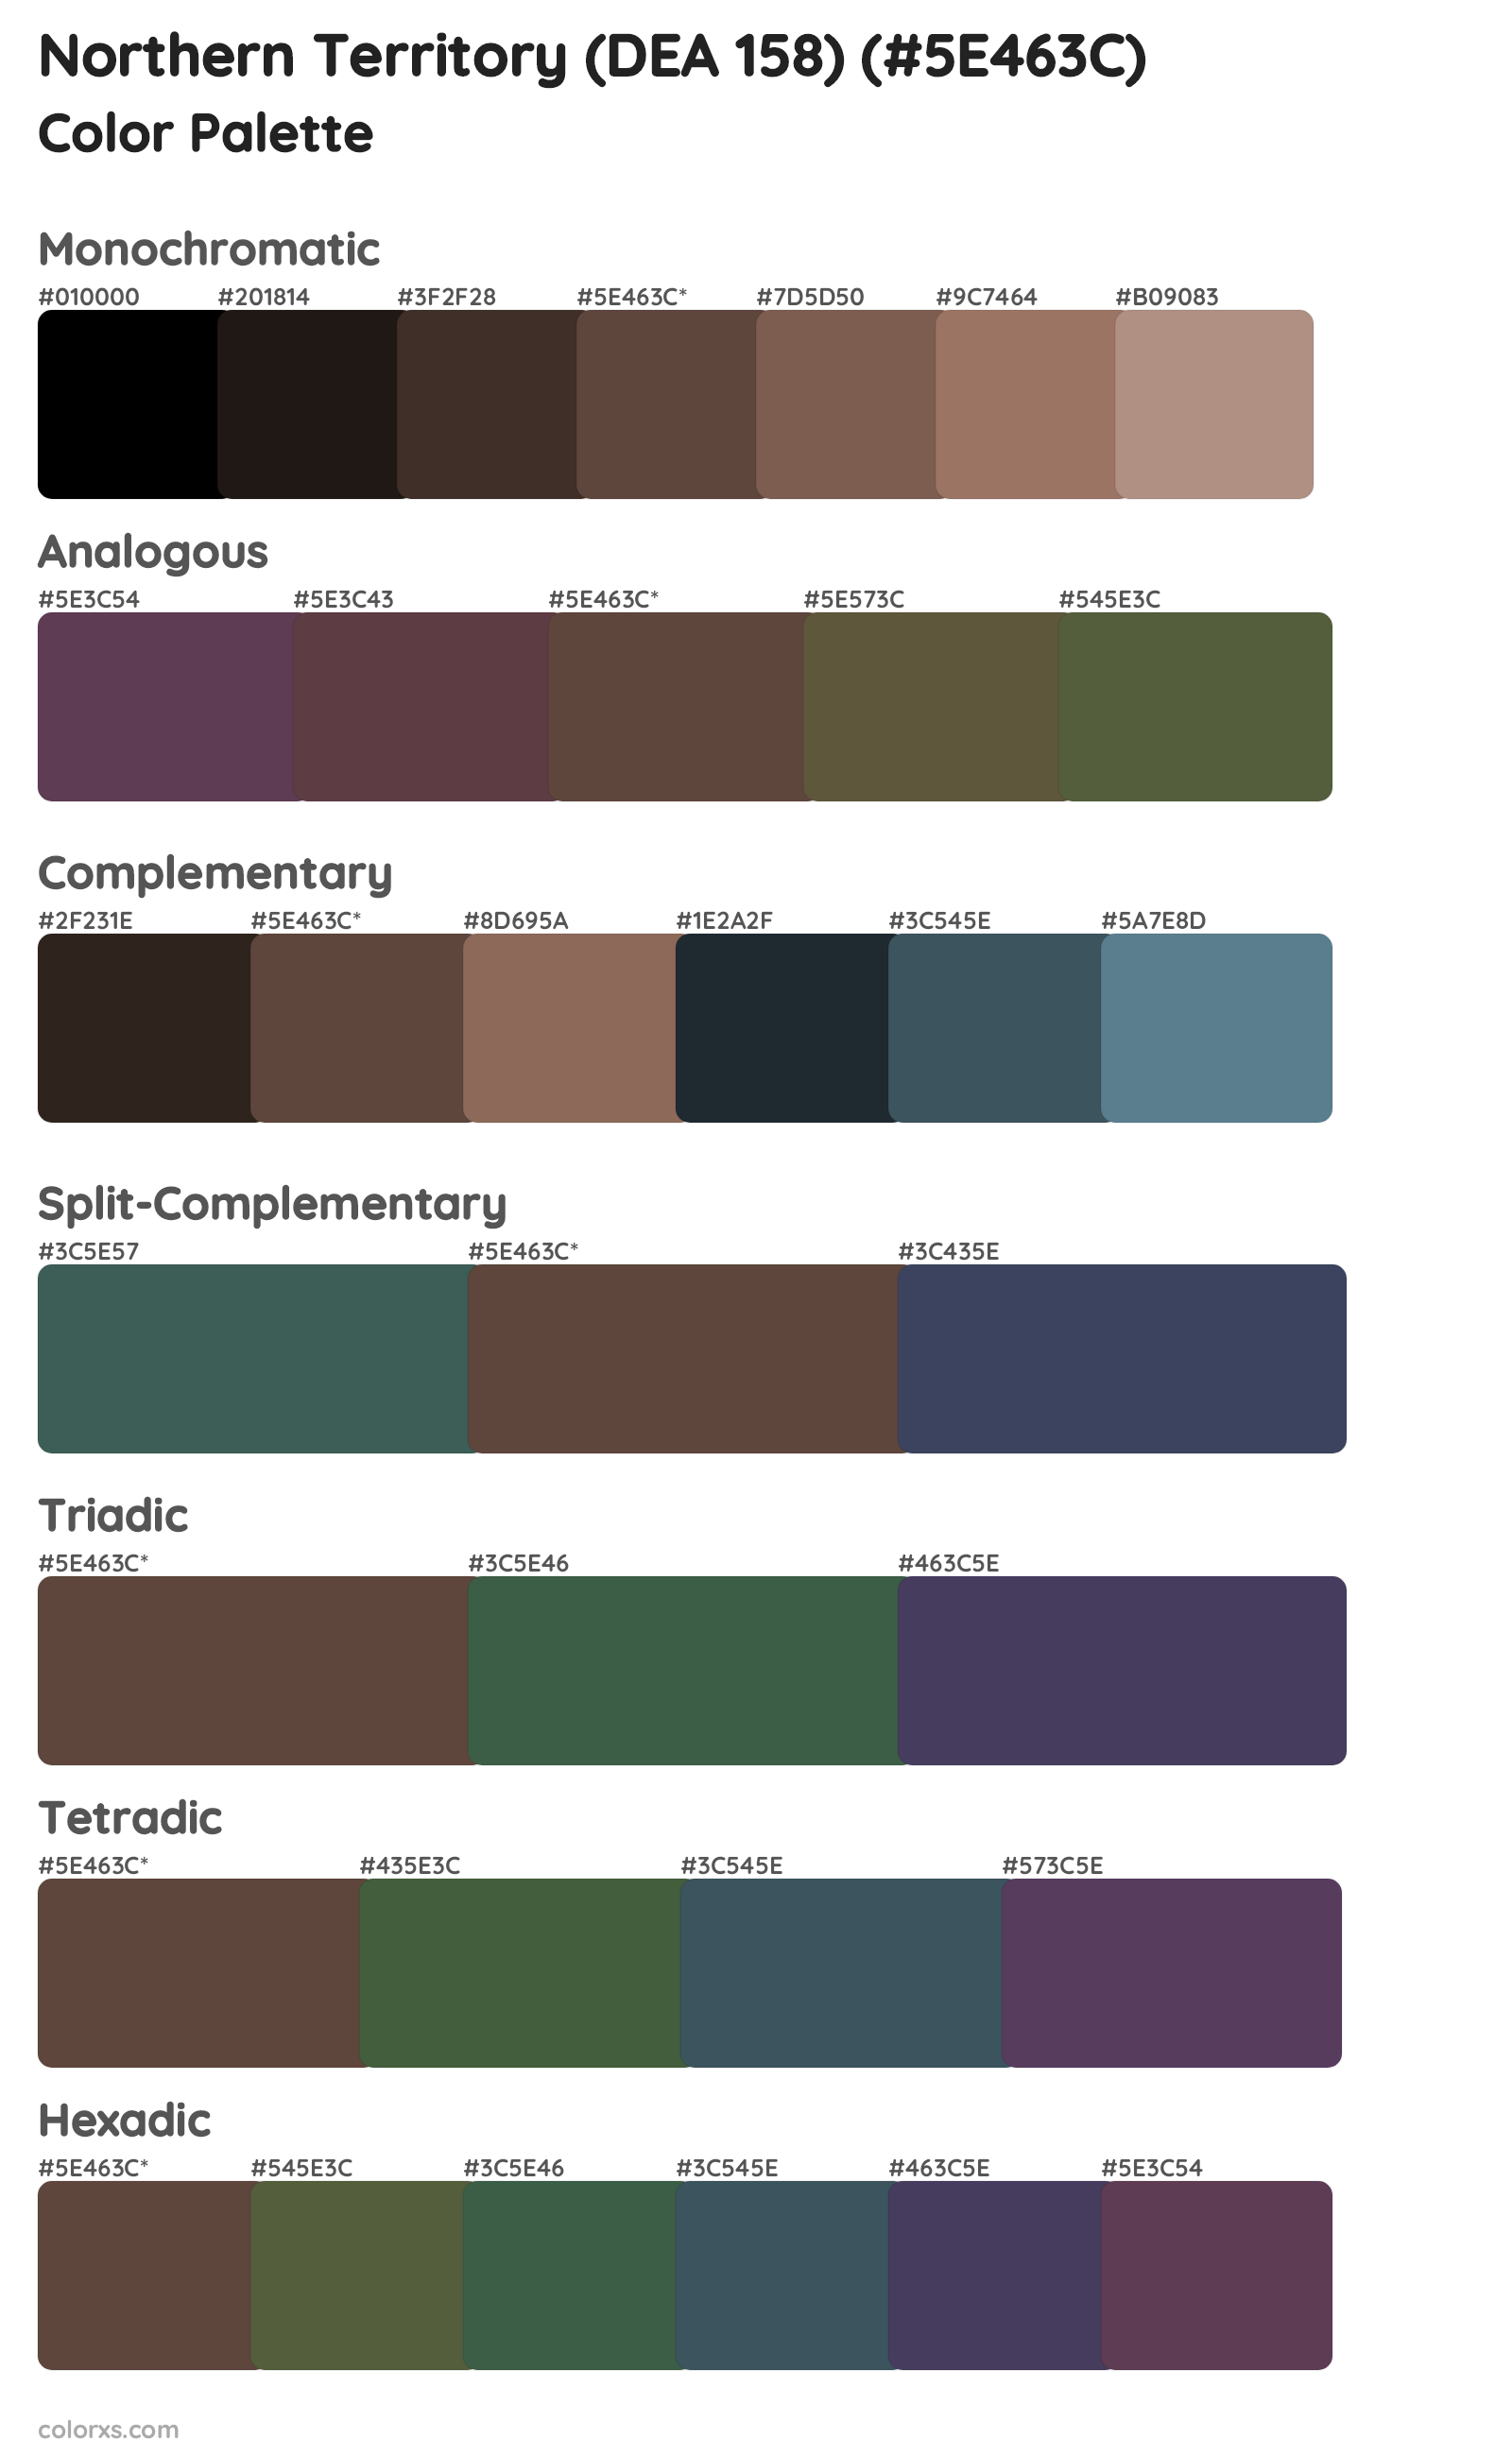 Northern Territory (DEA 158) Color Scheme Palettes